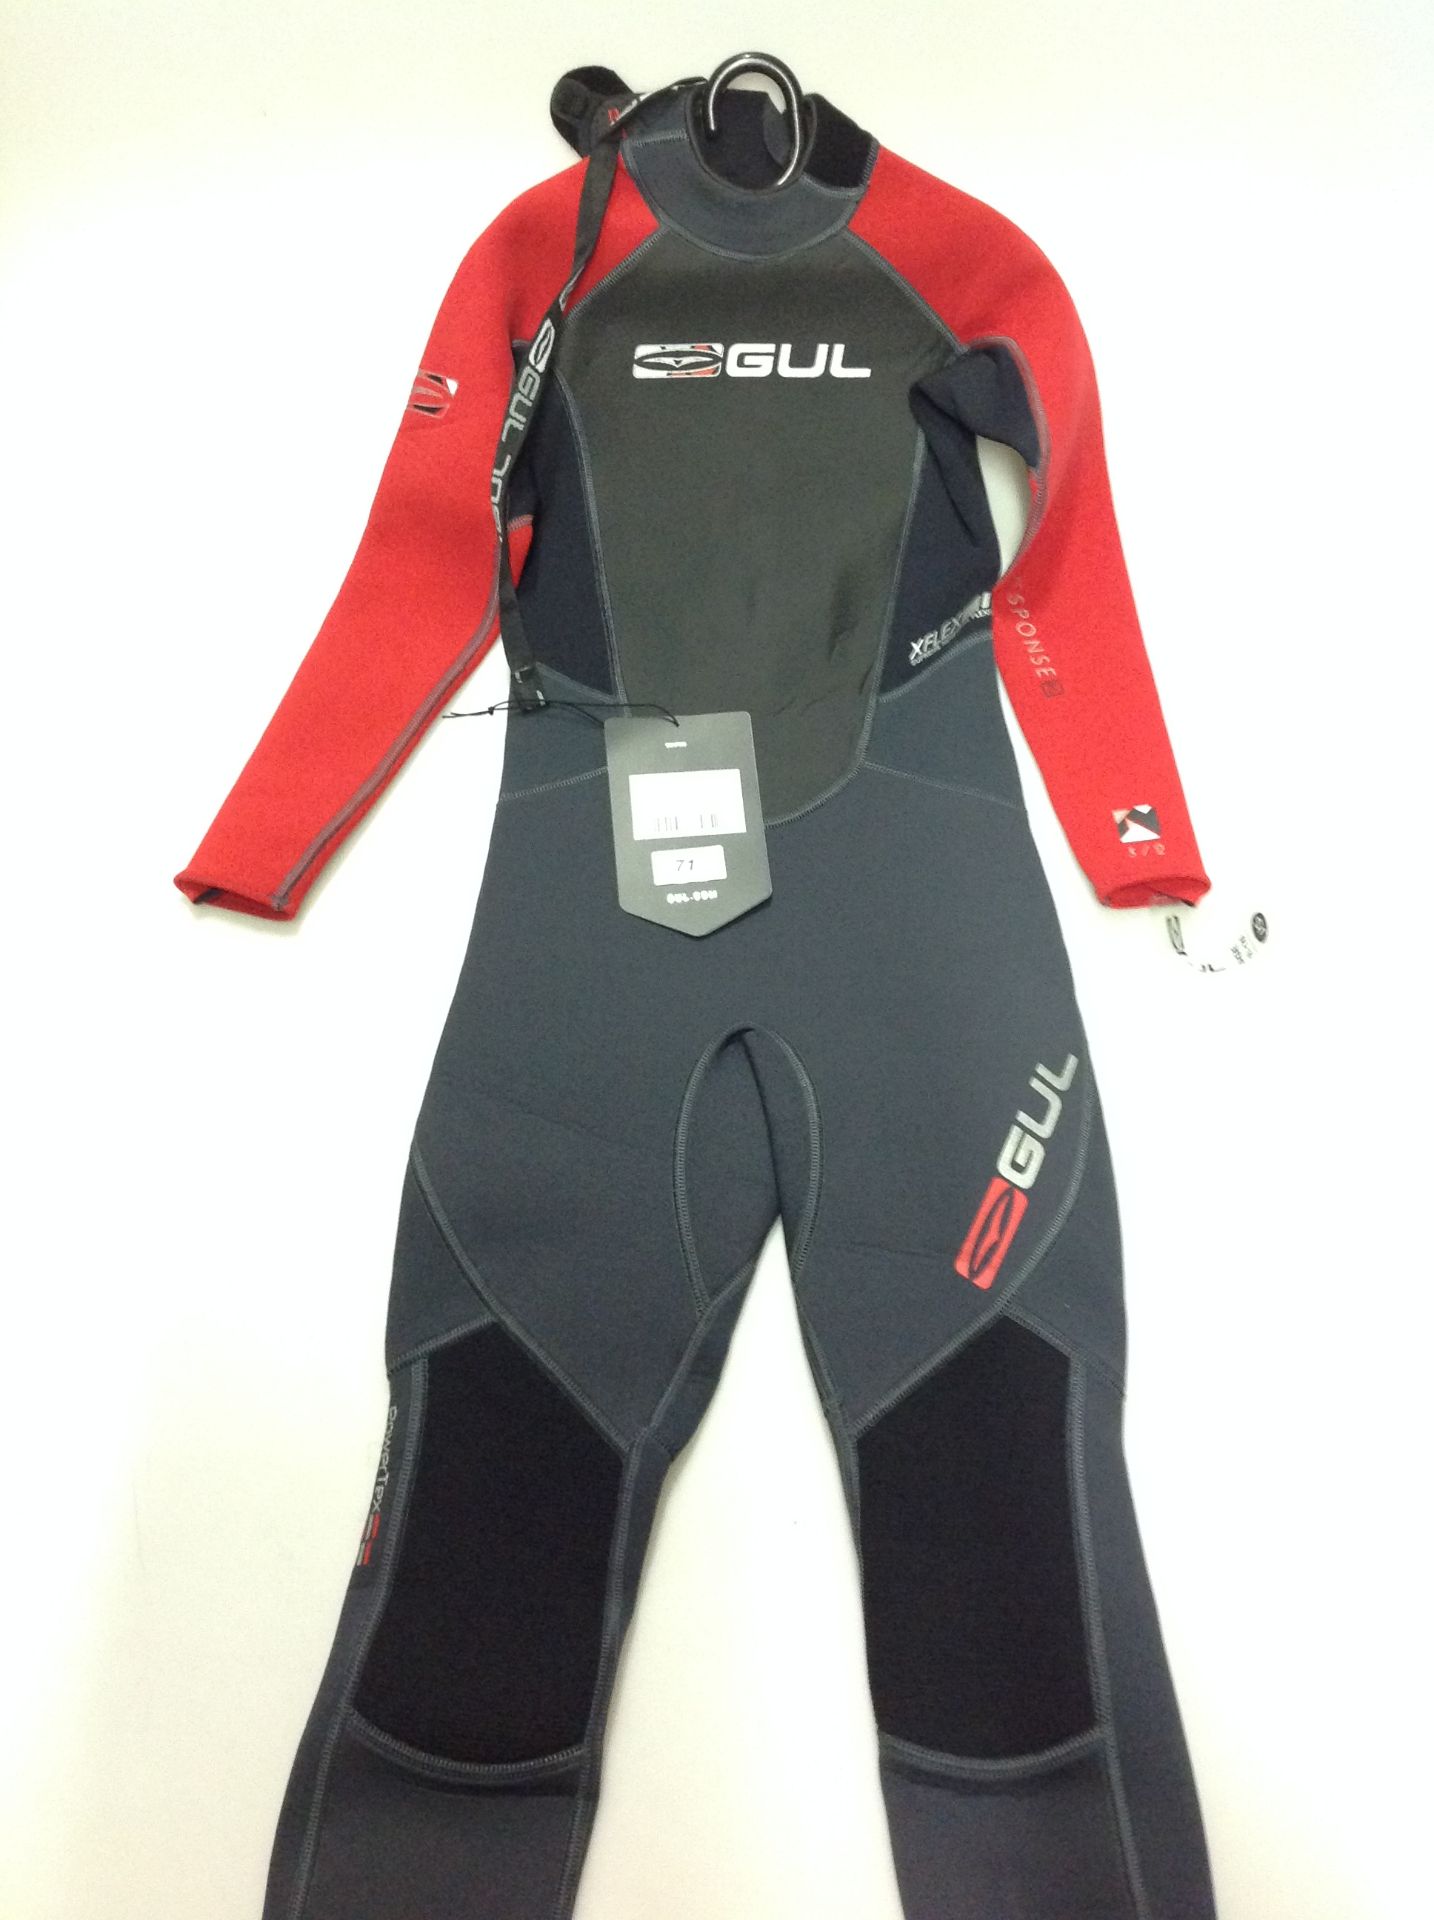 Gul Response 32 SDL FL wetsuit - size JS